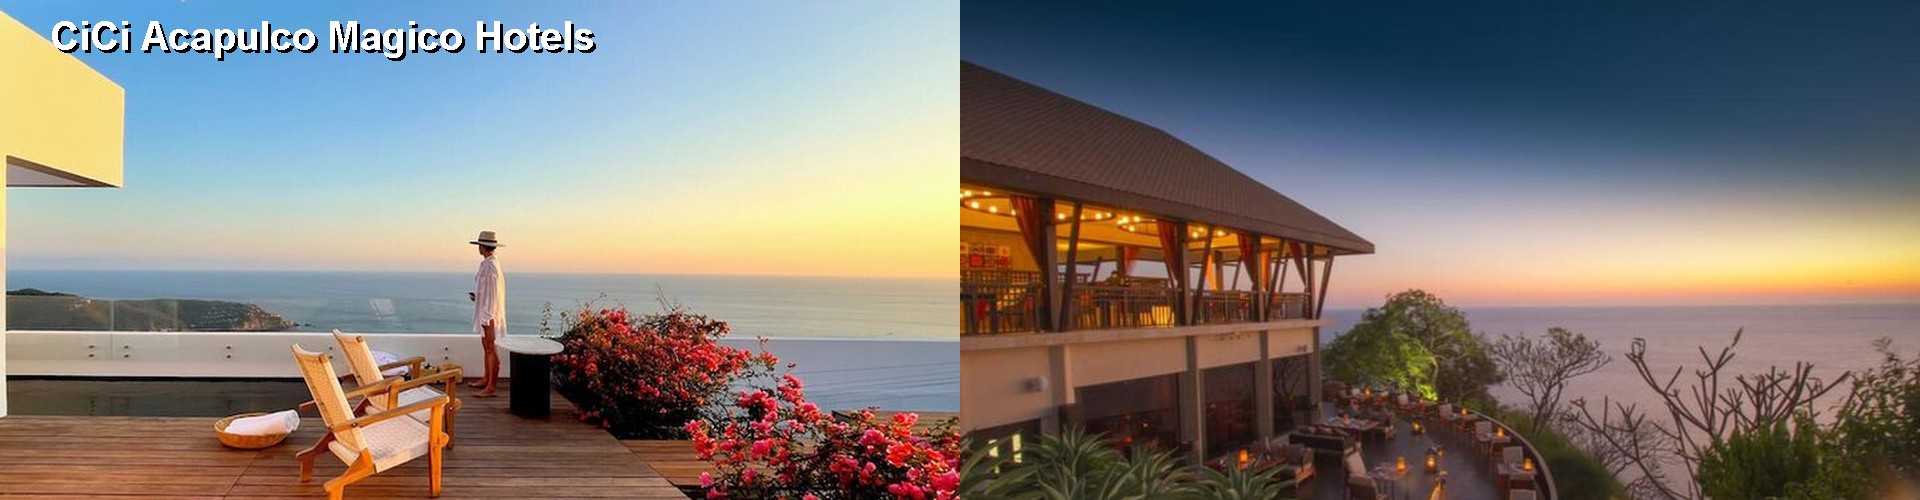 5 Best Hotels near CiCi Acapulco Magico